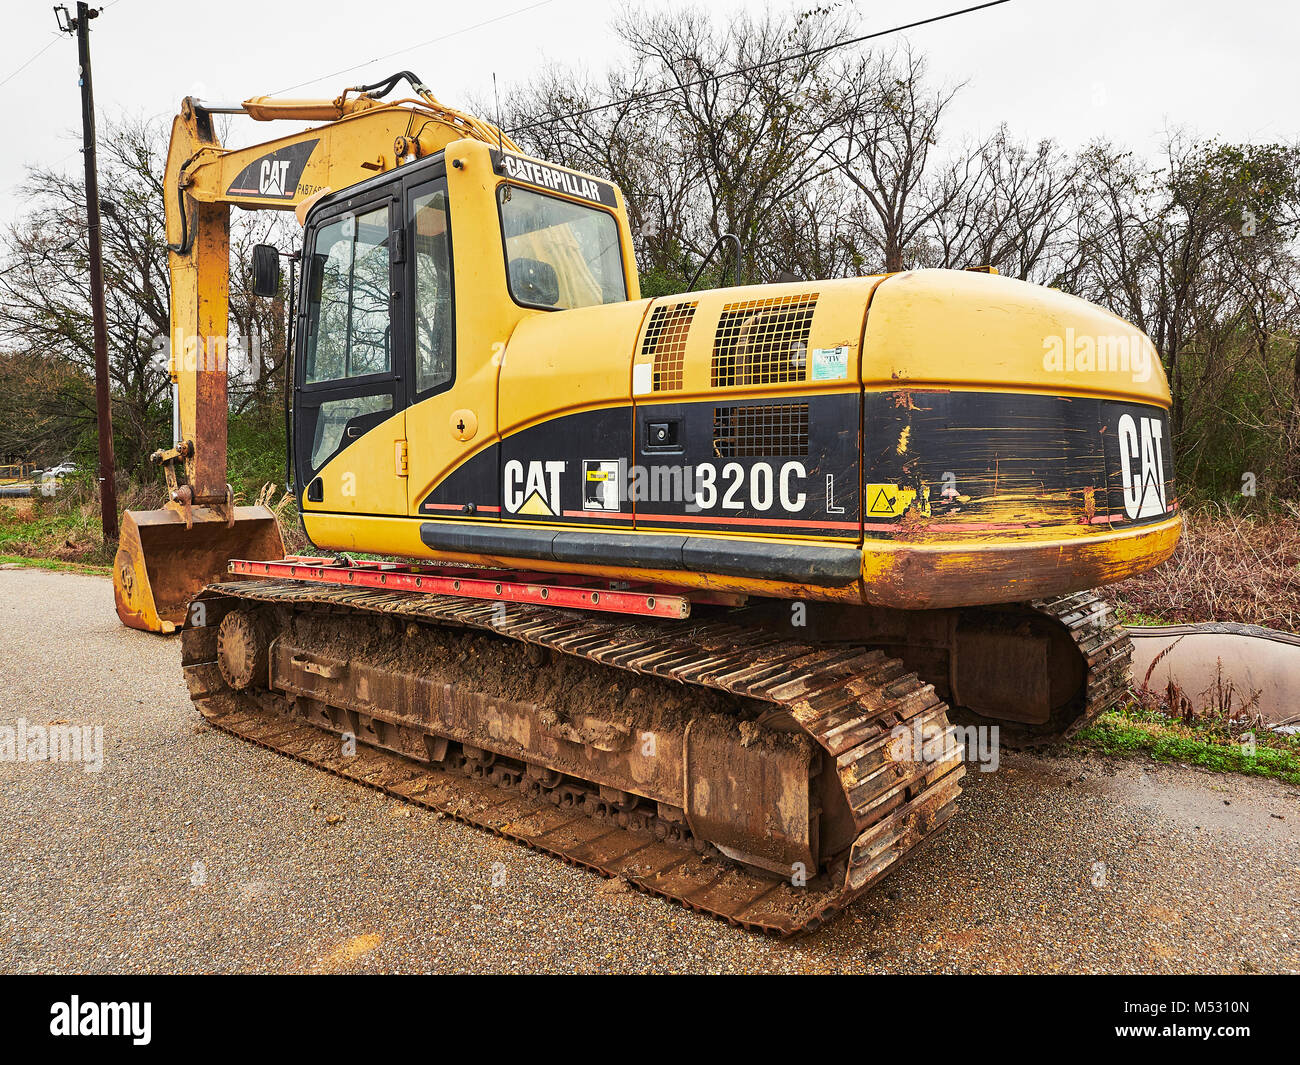 CAT 320C per impieghi pesanti digger, escavatore idraulico, un grande pezzo di macchinari da costruzione inattivi a Montgomery in Alabama USA. Foto Stock